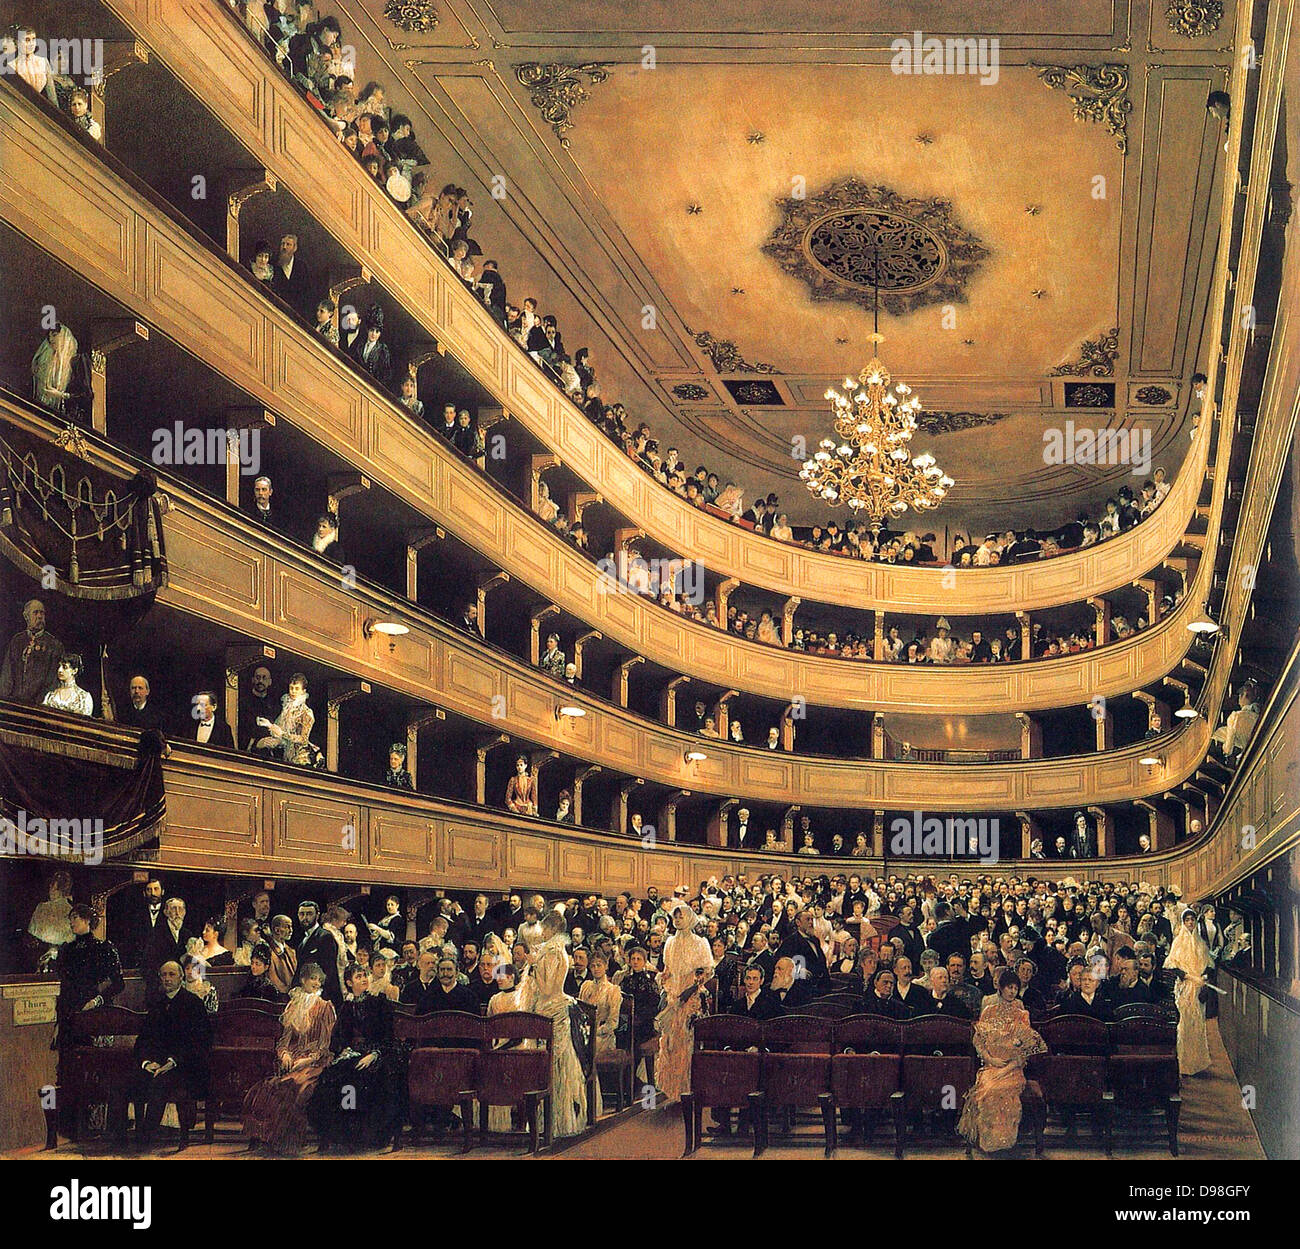 Gustav Klimt. Auditorio en el viejo Burgtheater en Viena 1888 Foto de stock